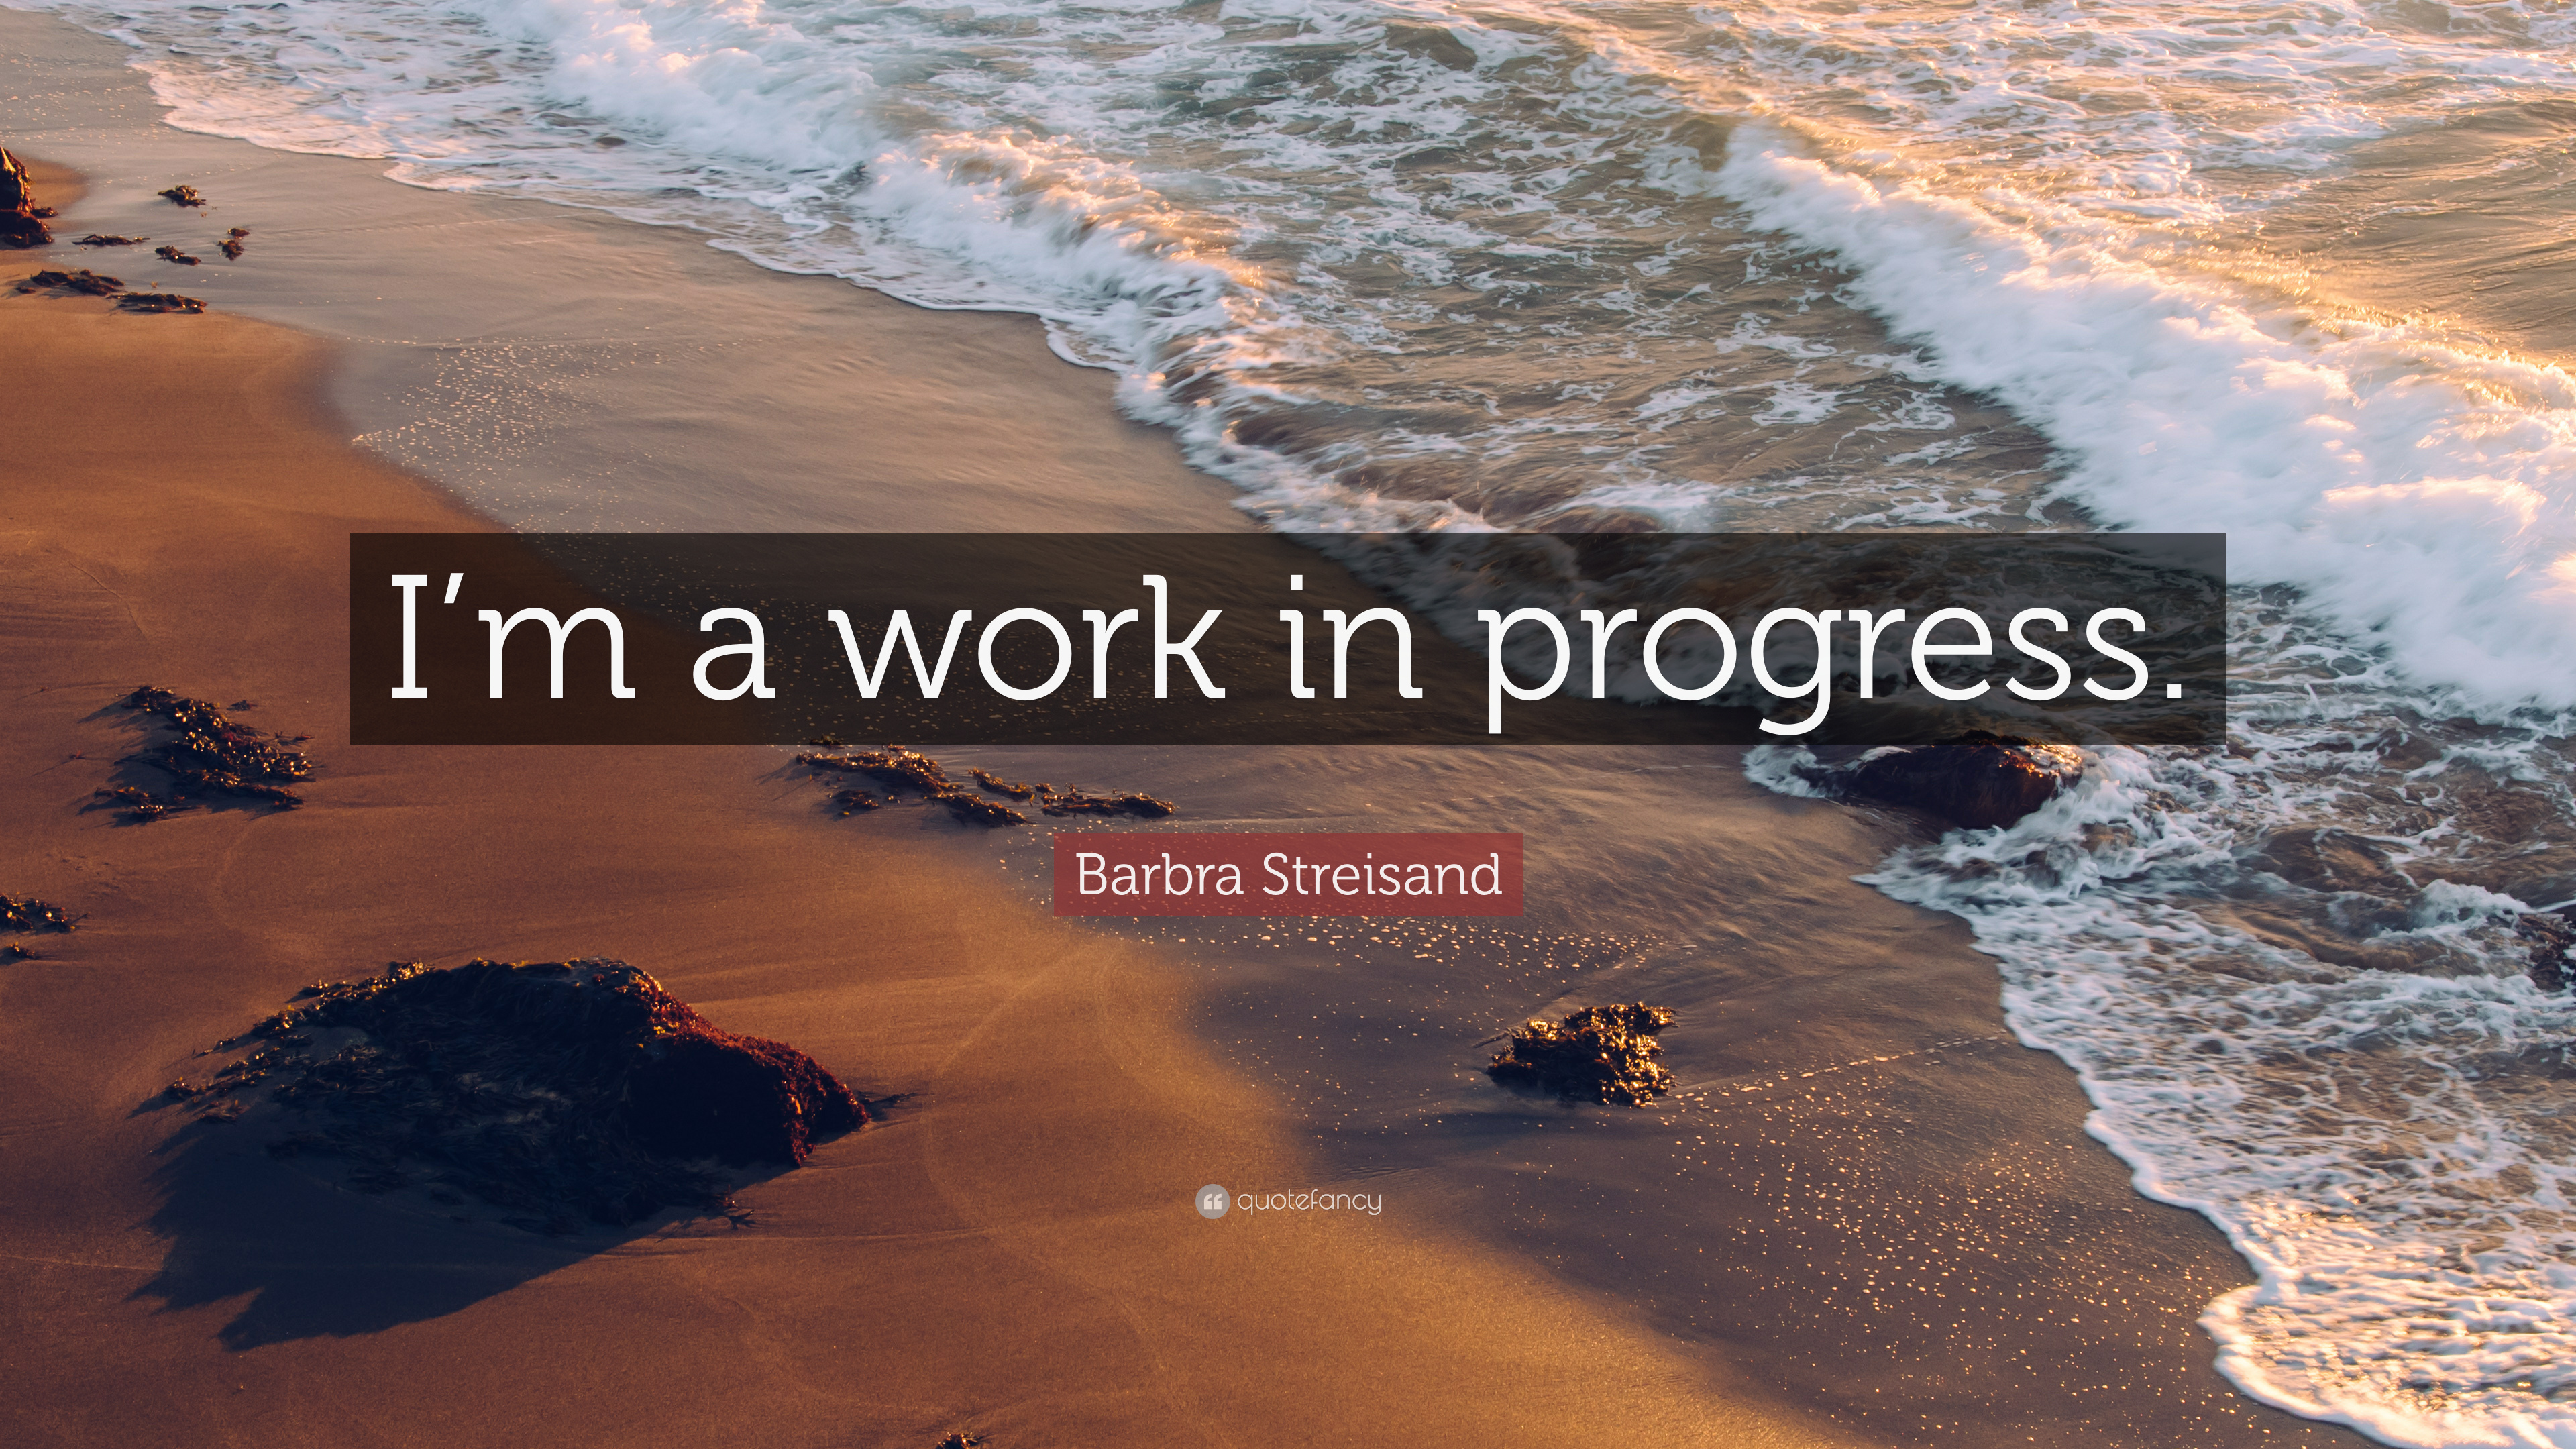 Barbra Streisand Quote: “I'm a work in progress.”